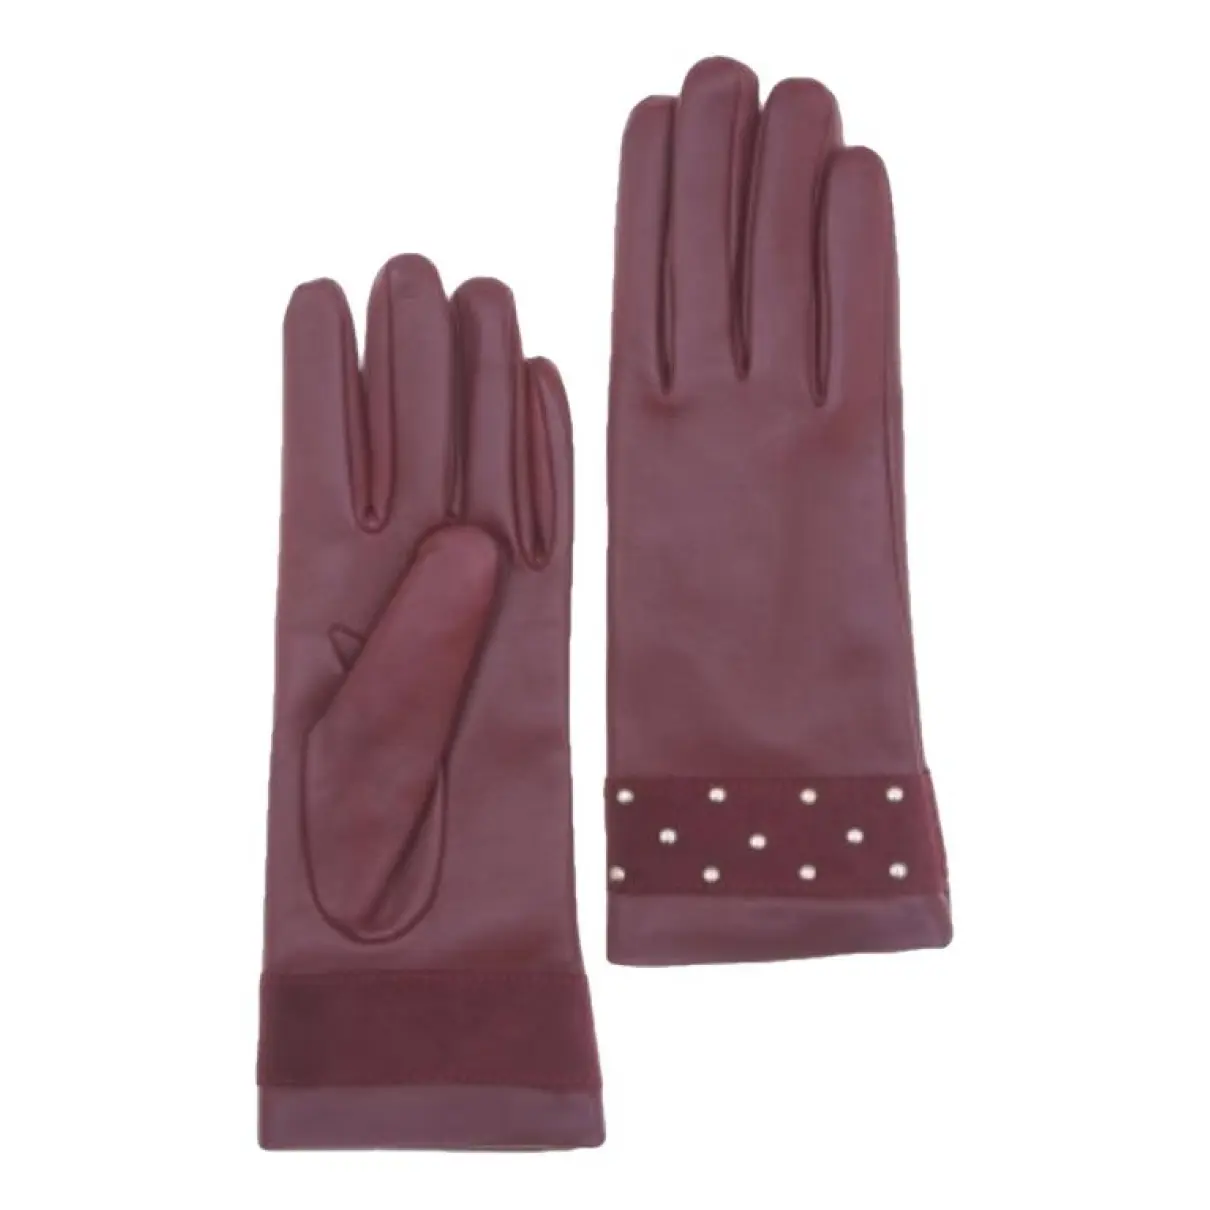 Max Mara Atelier leather gloves